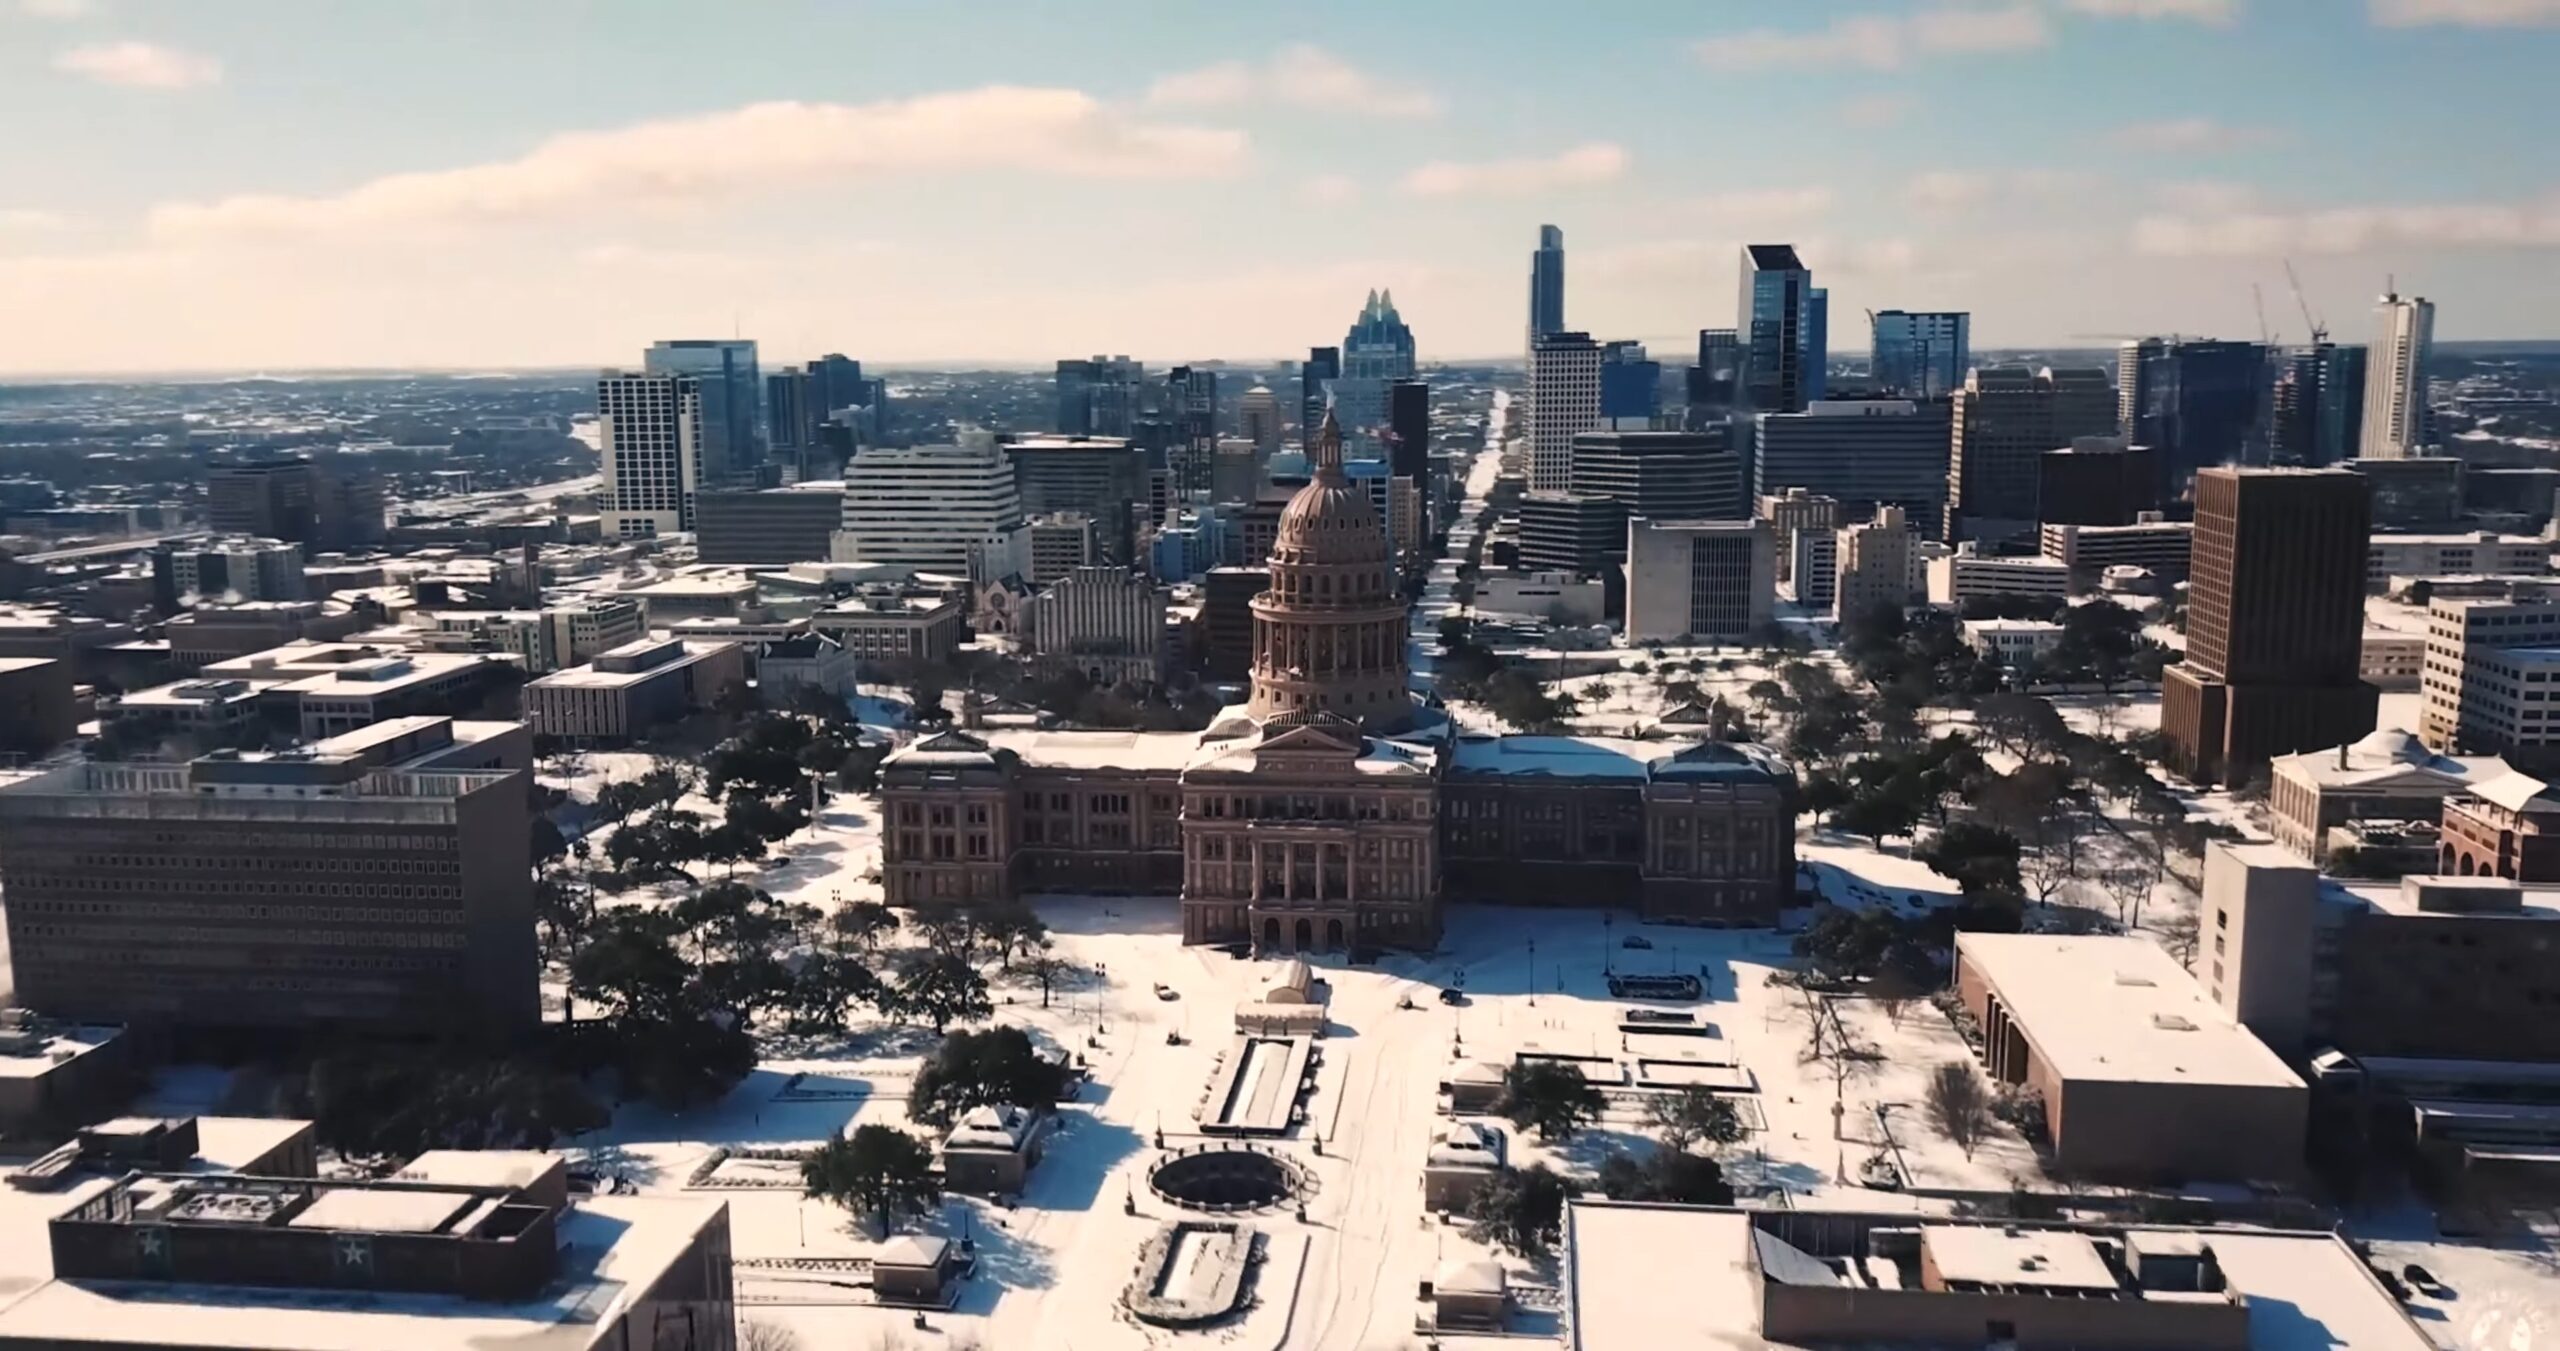 Austin, TX - Winter, Snow